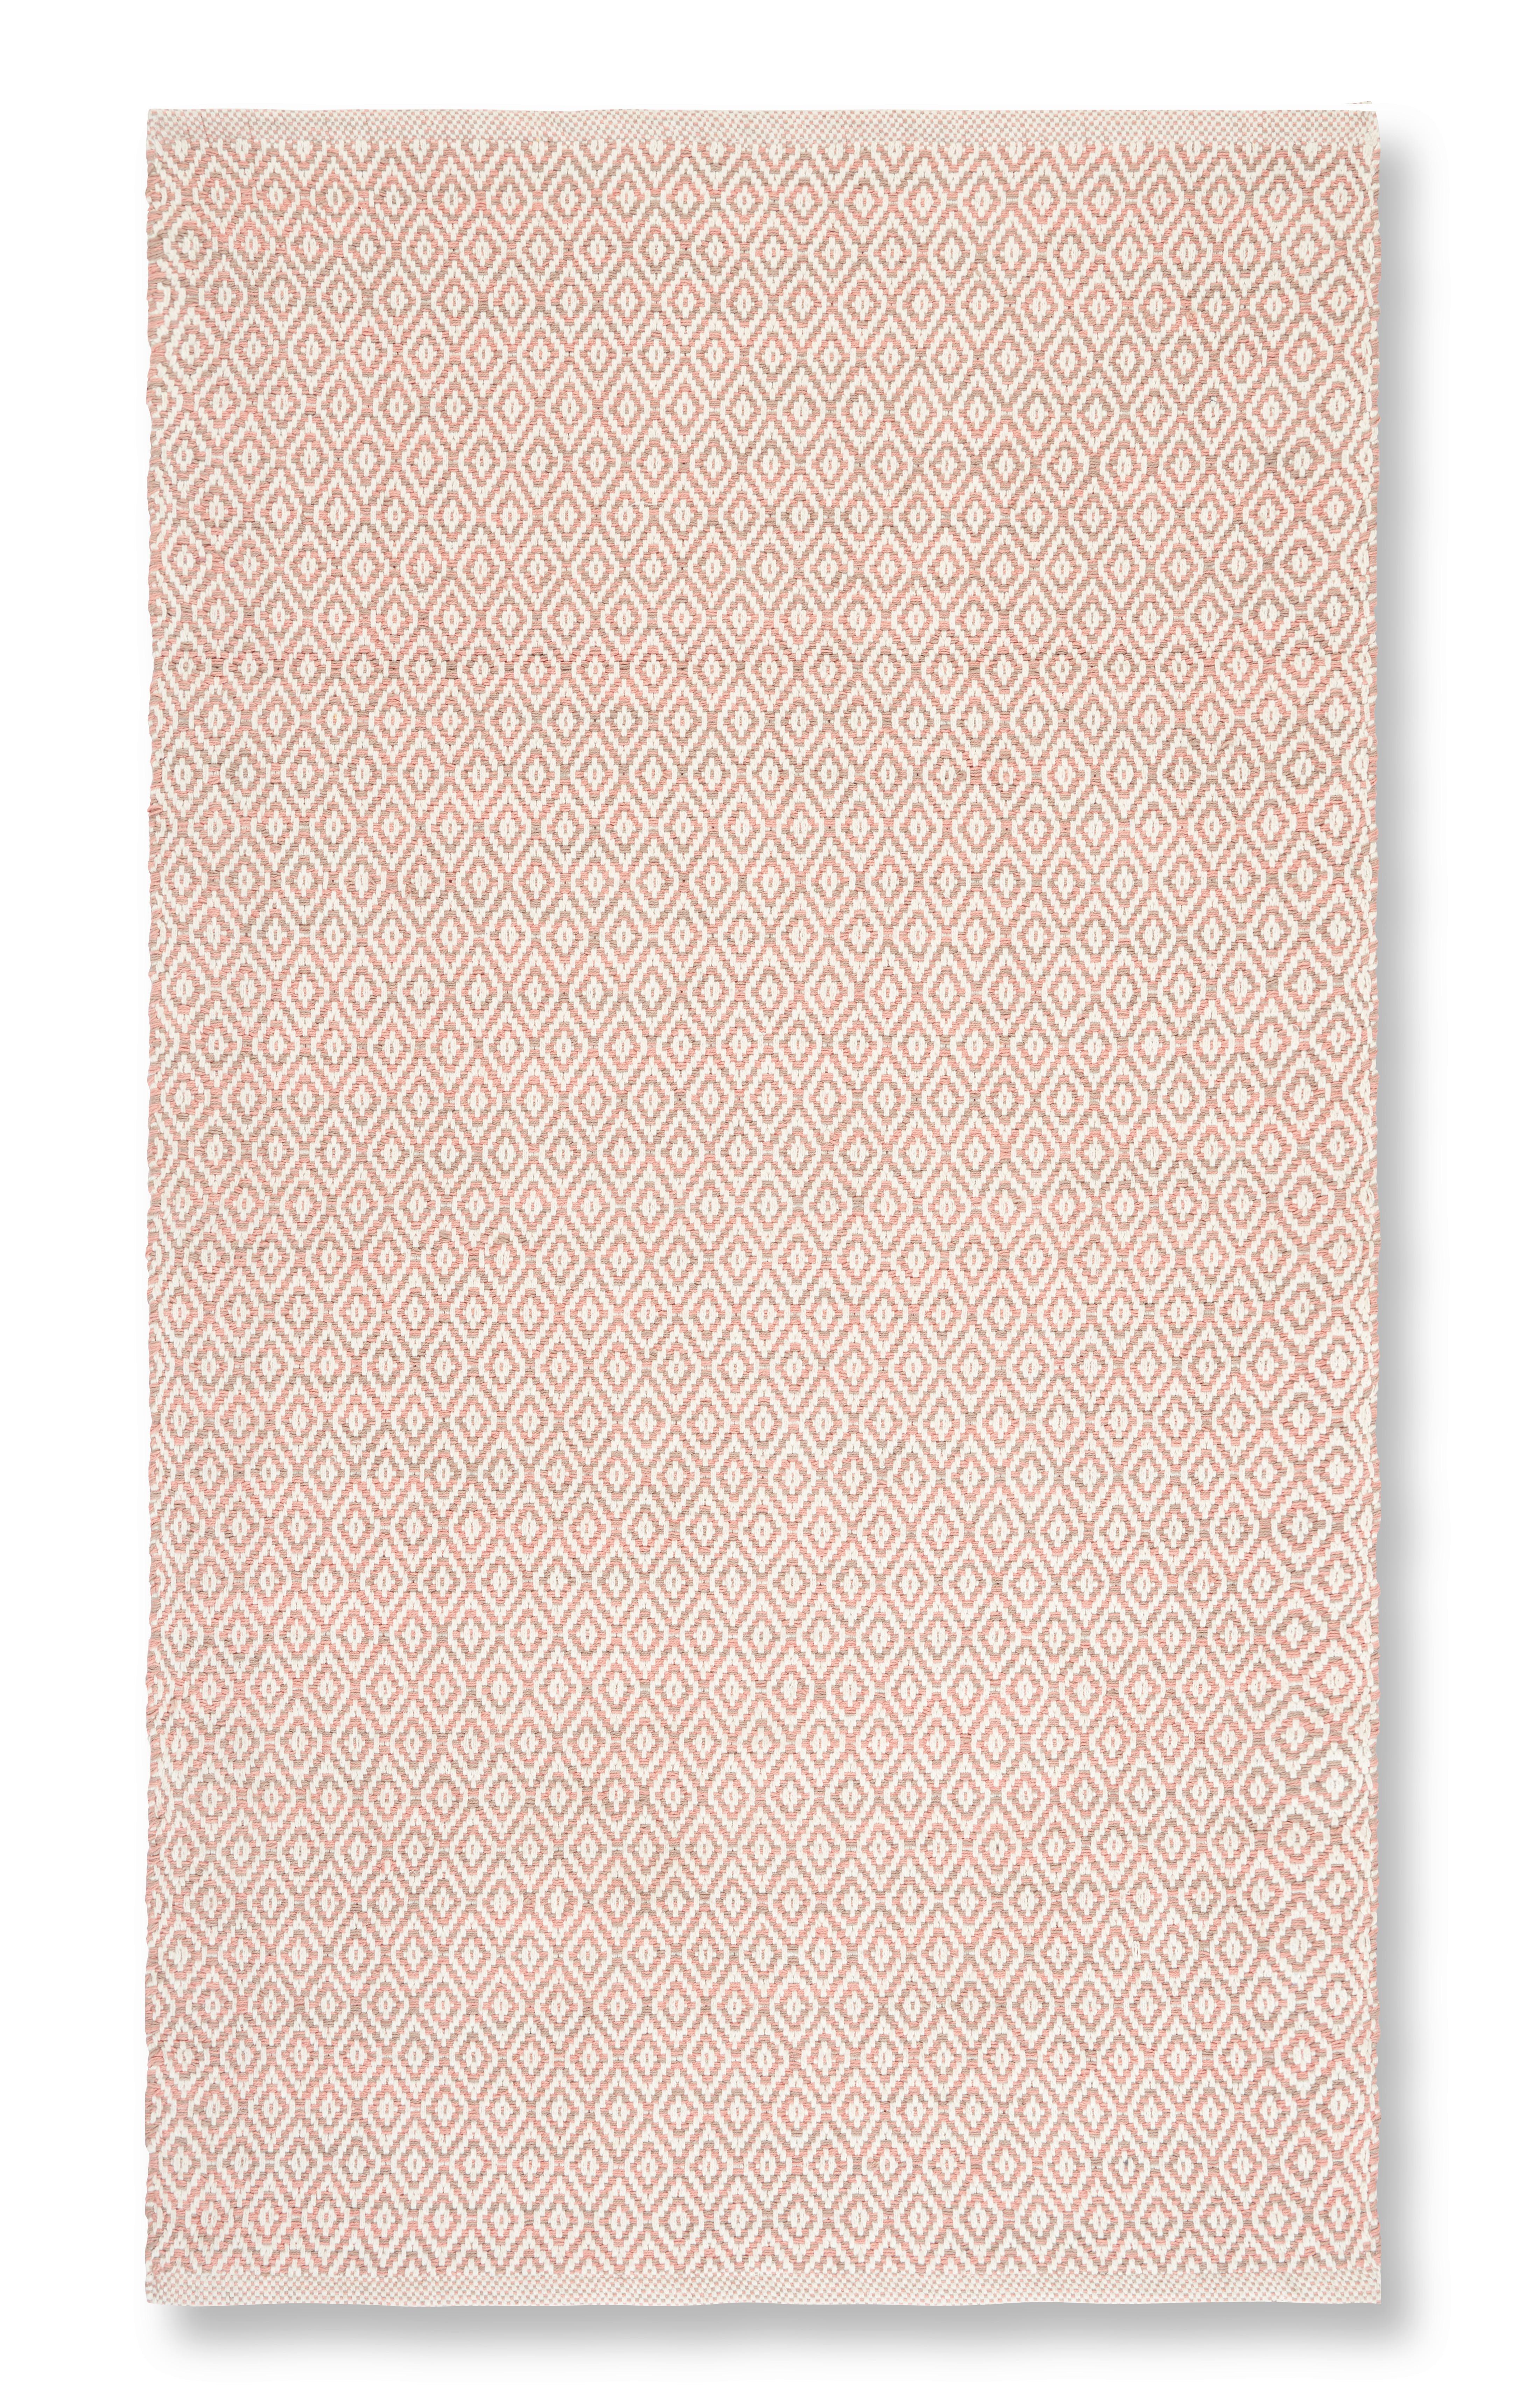 Ručně Tkaný Koberec Carola 1, 60/120cm, Růžová - růžová, Basics, textil (60/120cm) - Modern Living